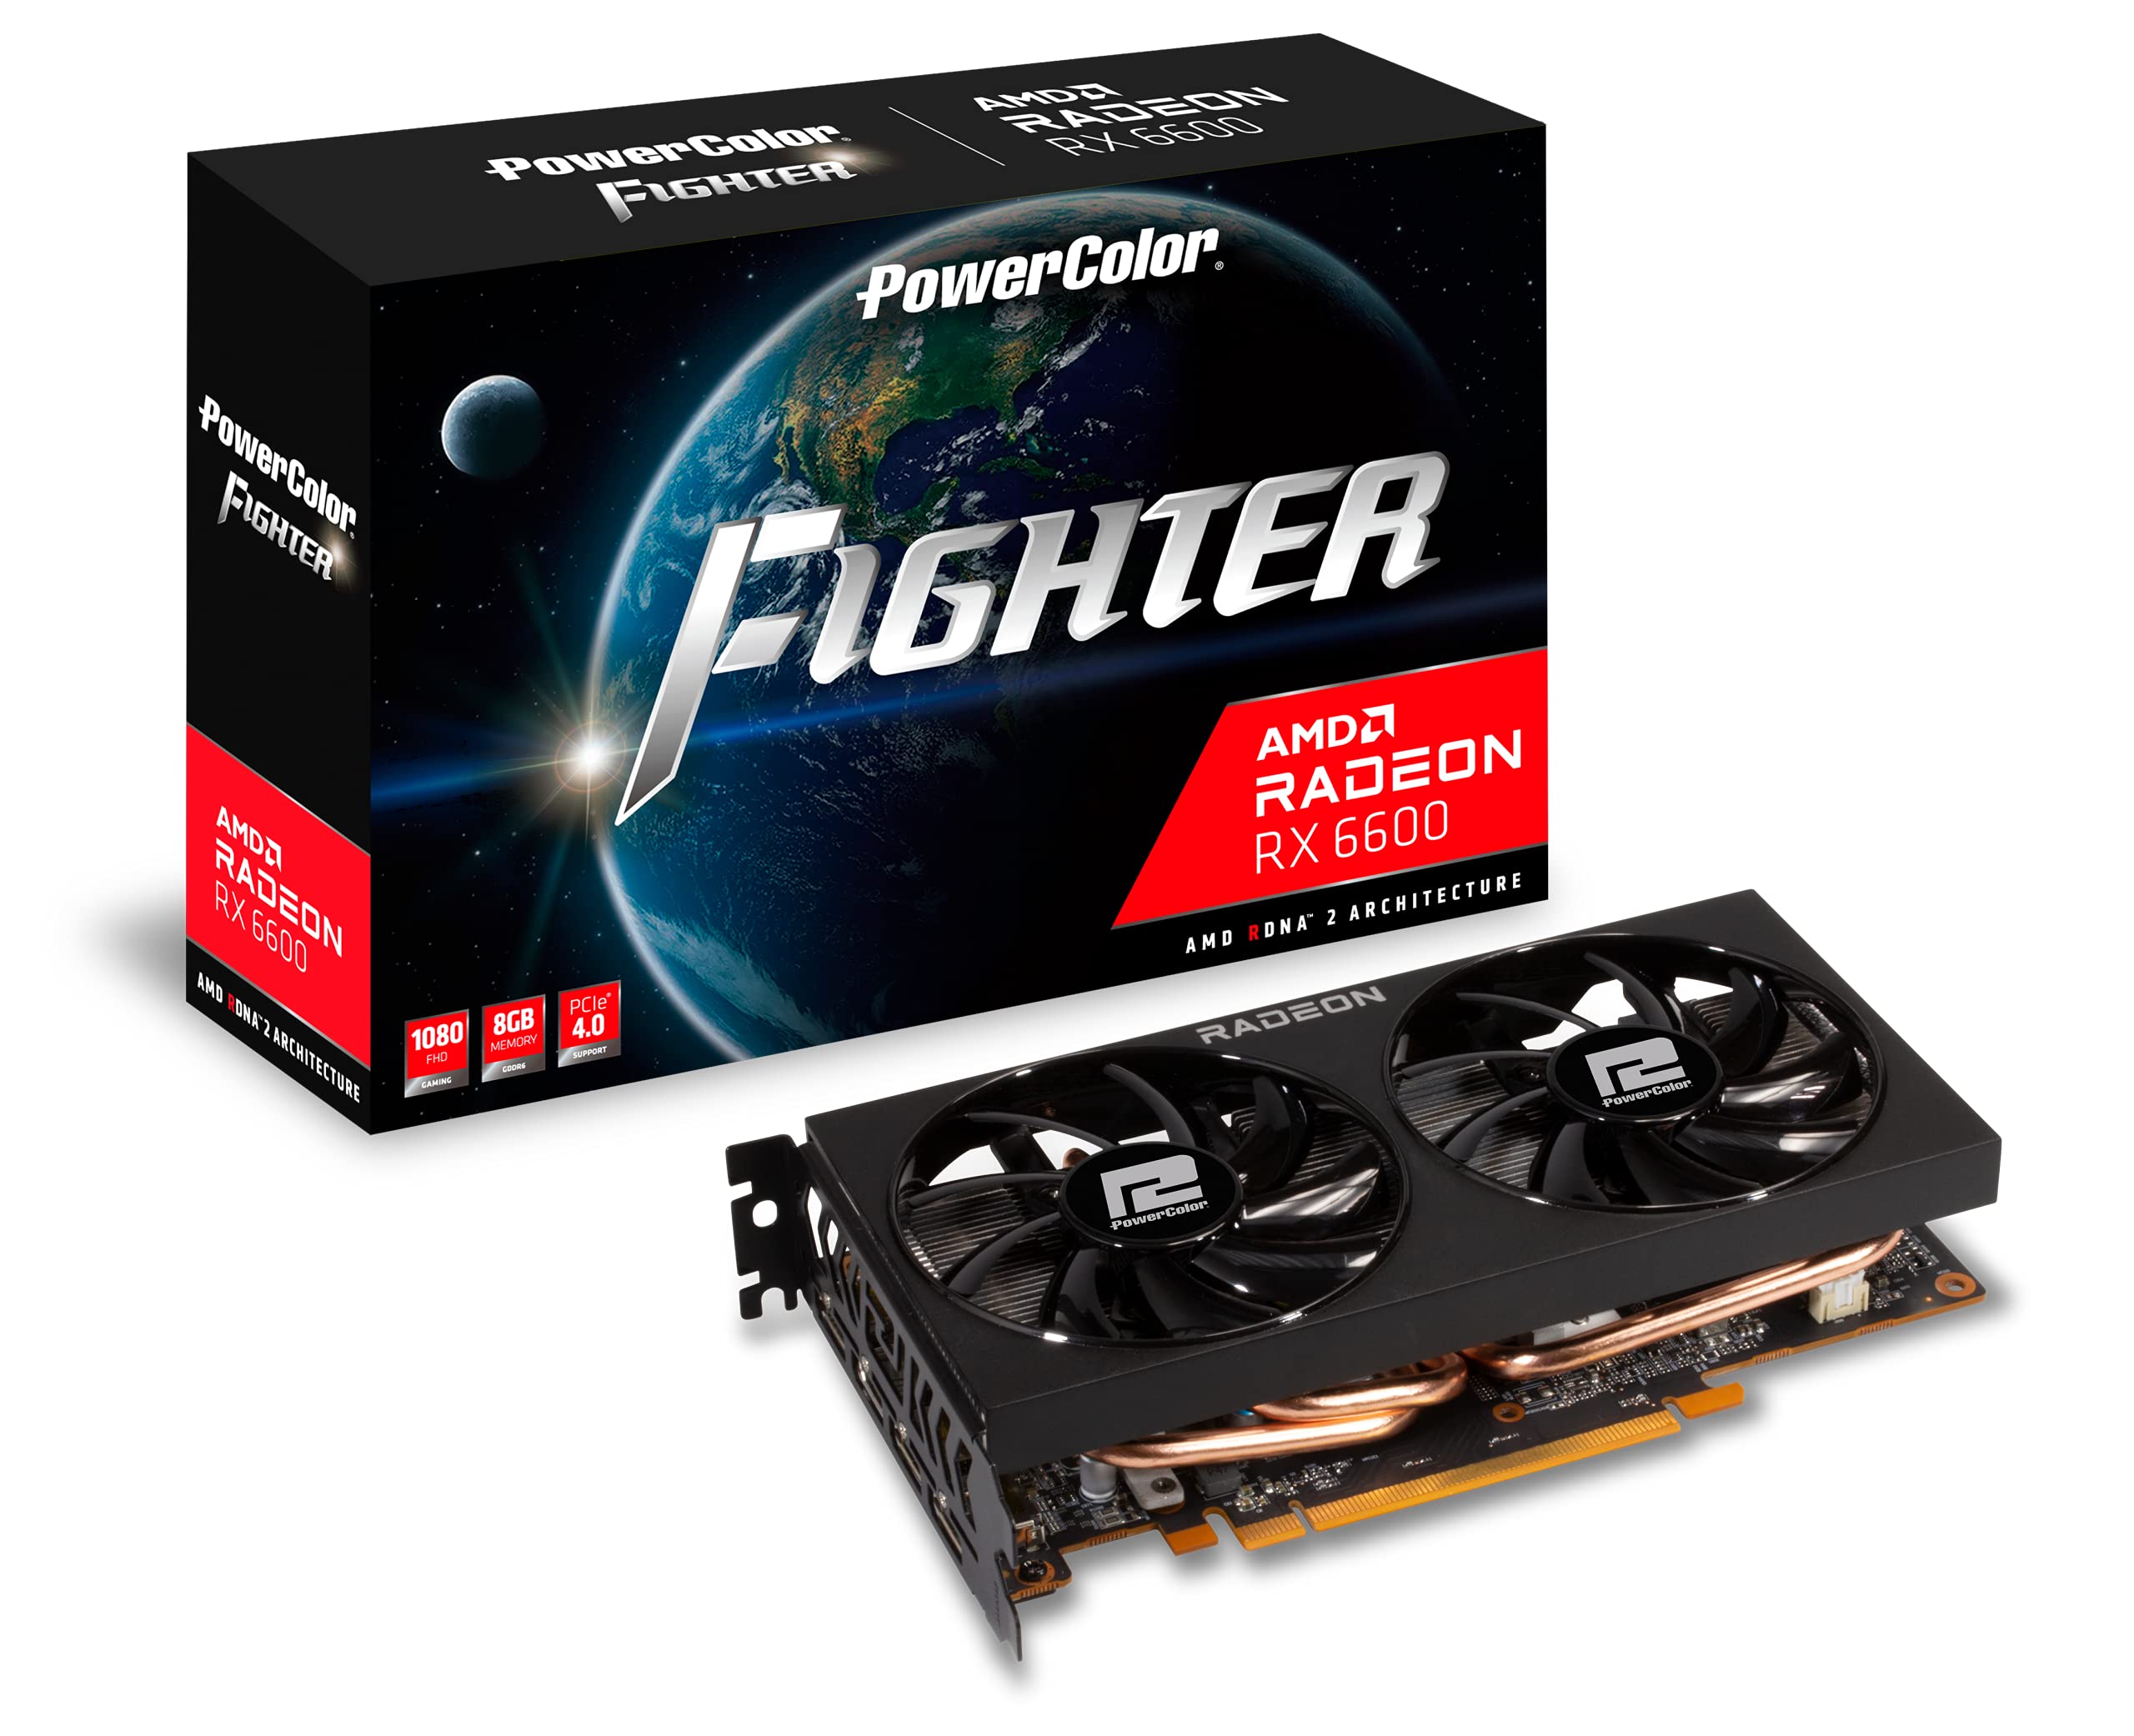 PowerColor Fighter AMD Radeon RX 6600 8GB Graphics Card - $179.99 + F/S - Amazon